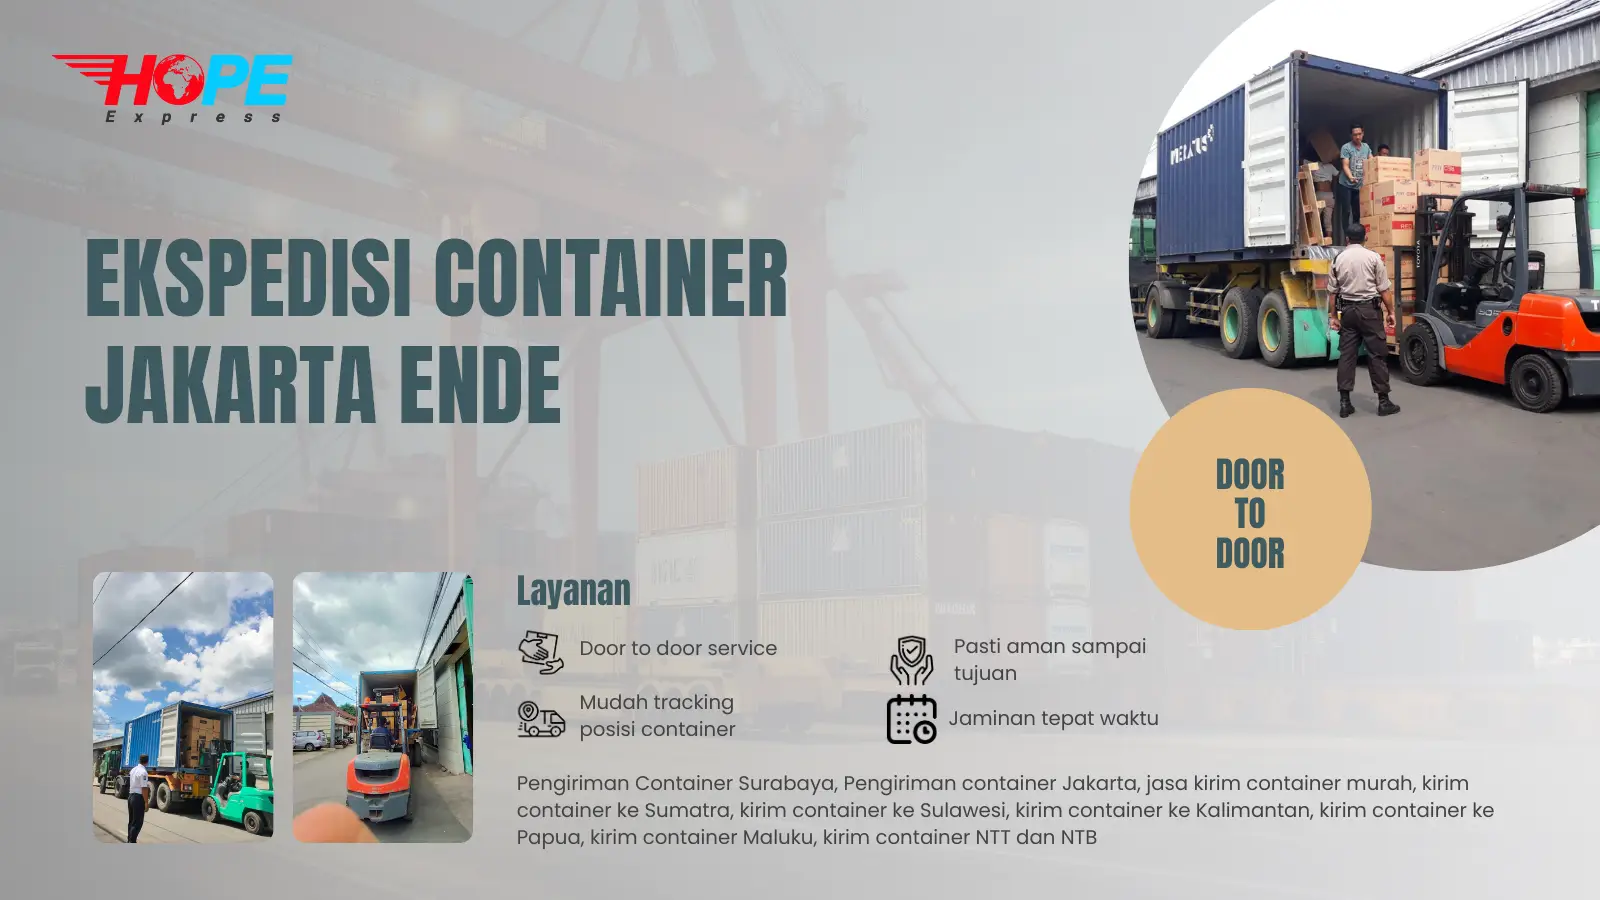 Ekspedisi Container Jakarta Ende